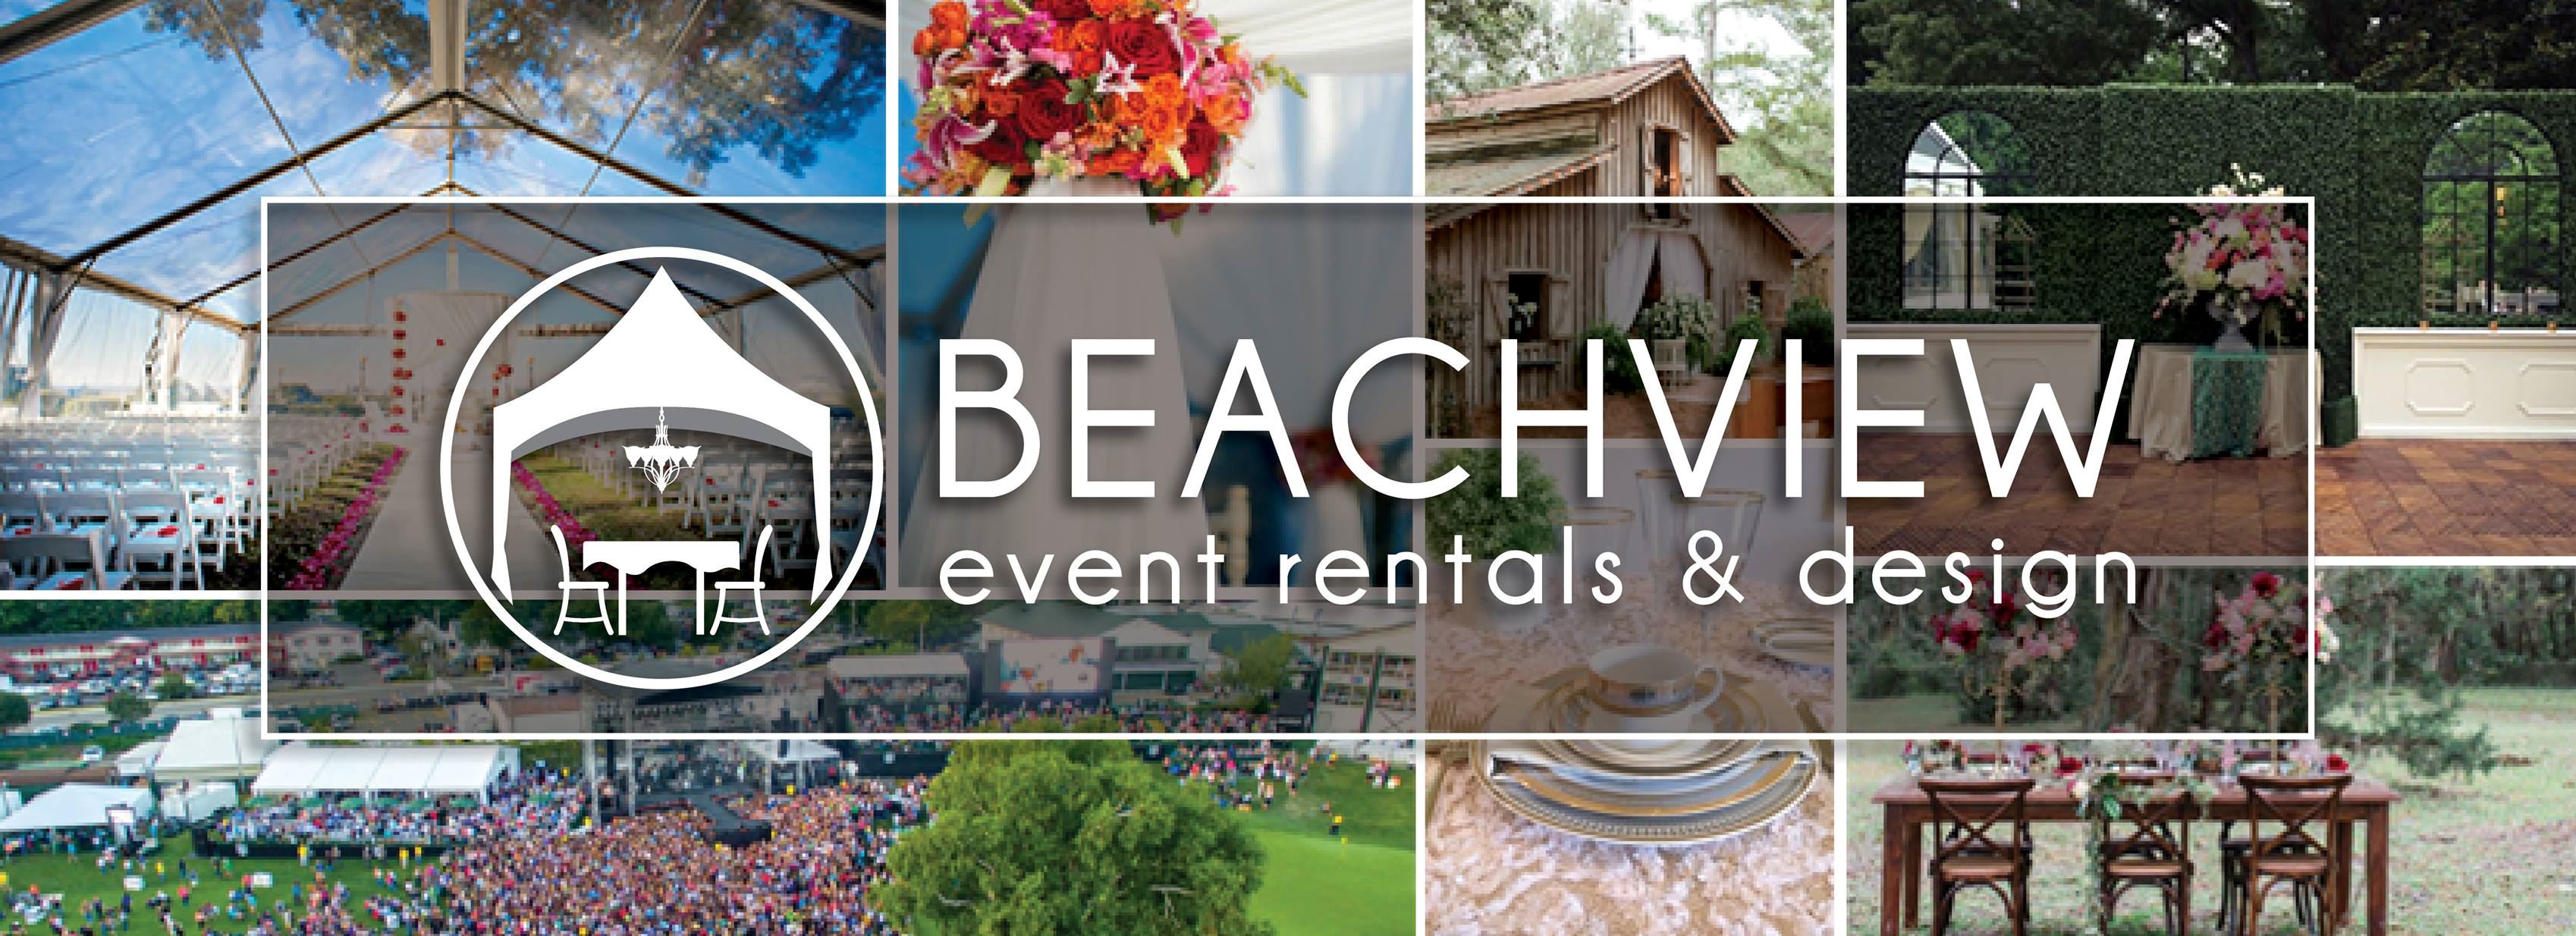 Beachview Event Rentals & Design Savannah - 1